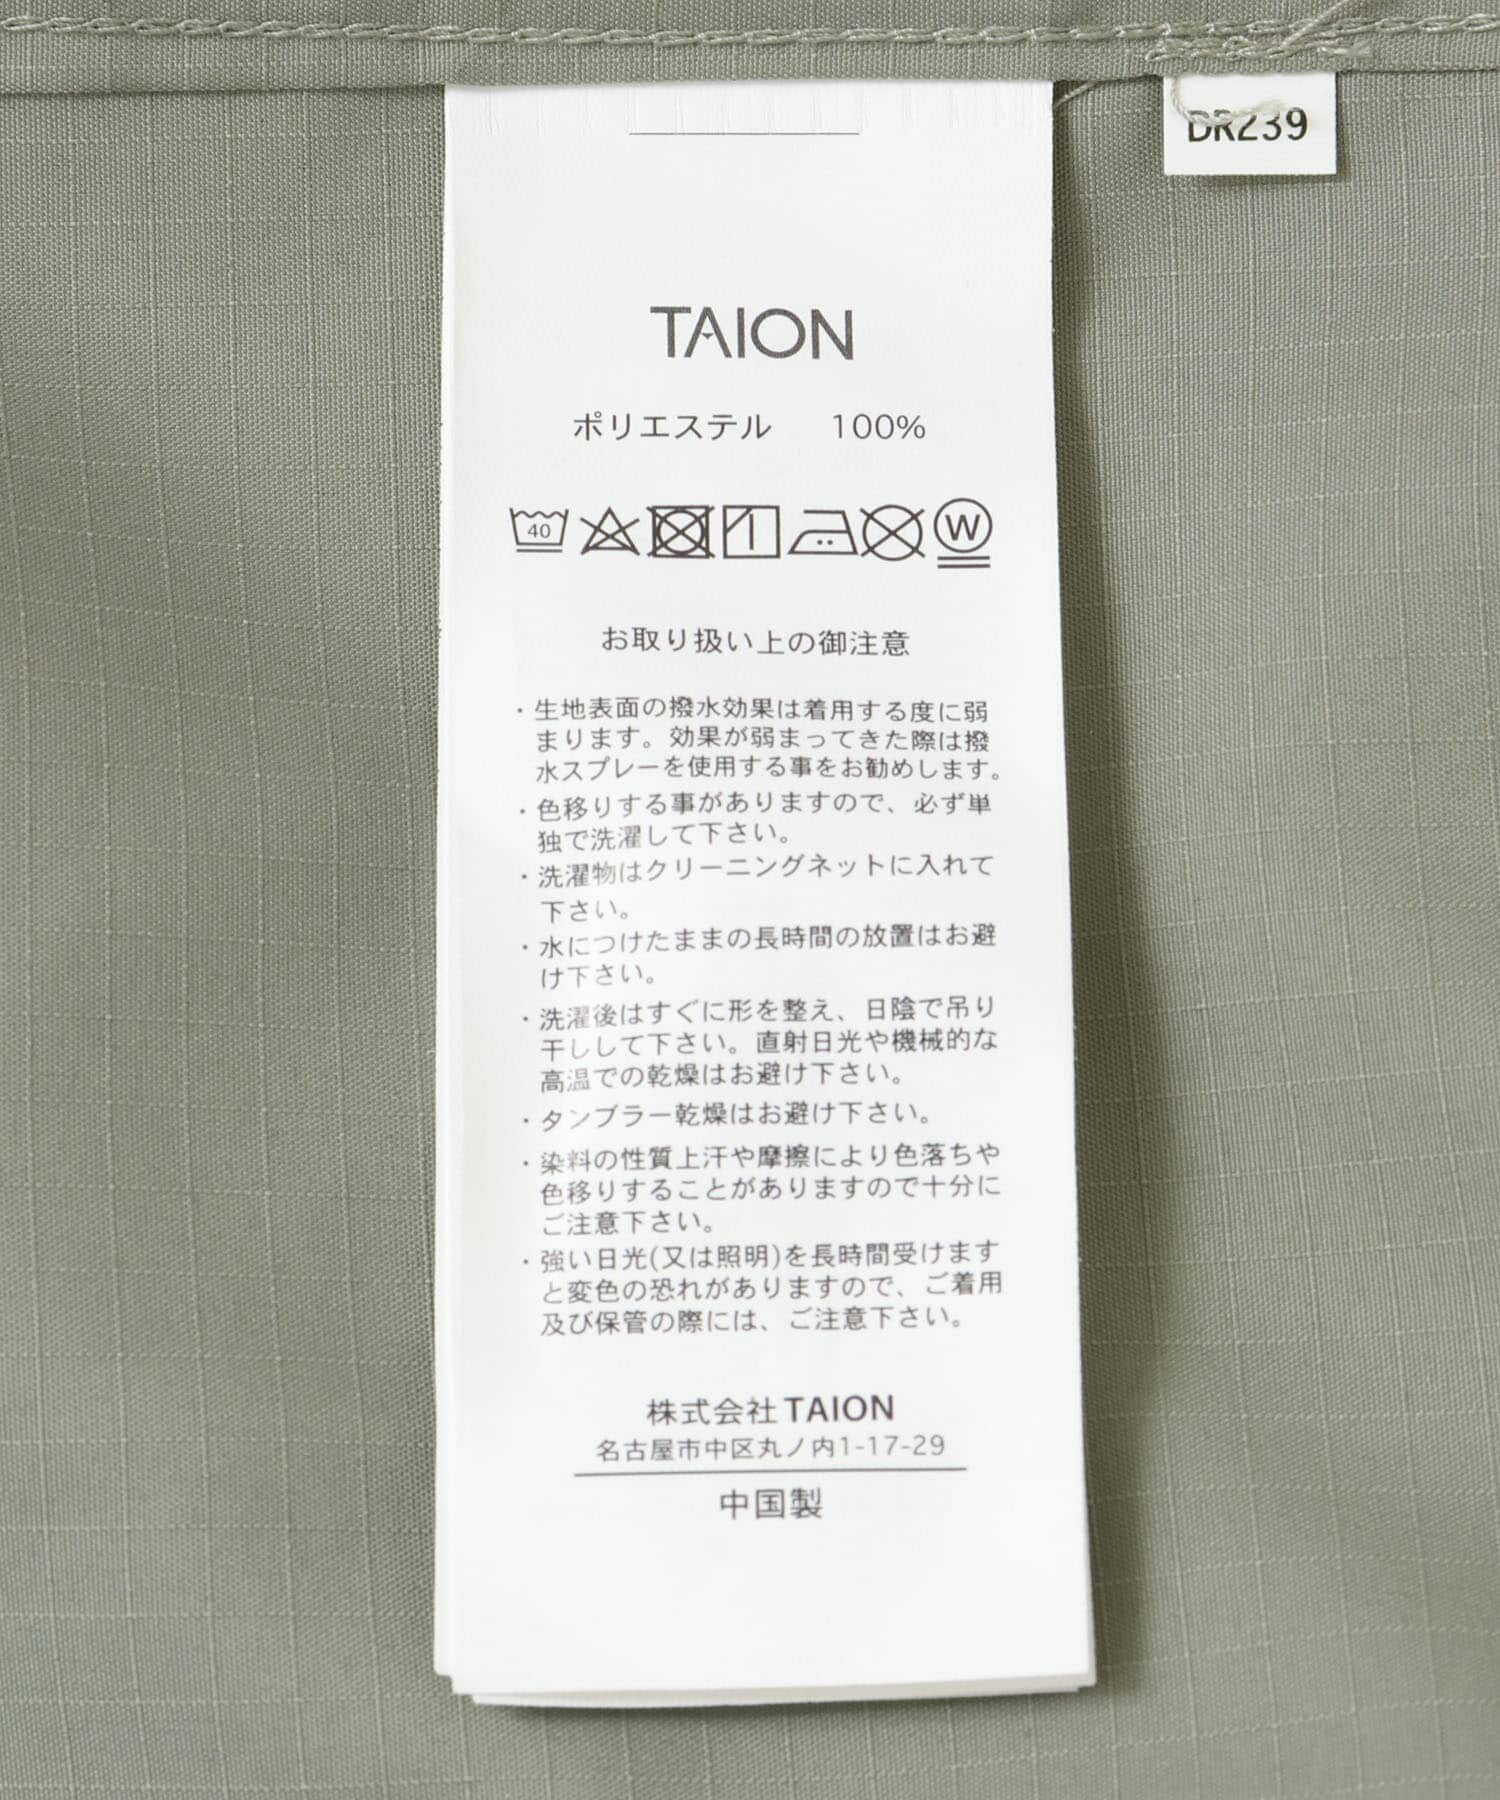 TAION Military Long Sleeve Shirts